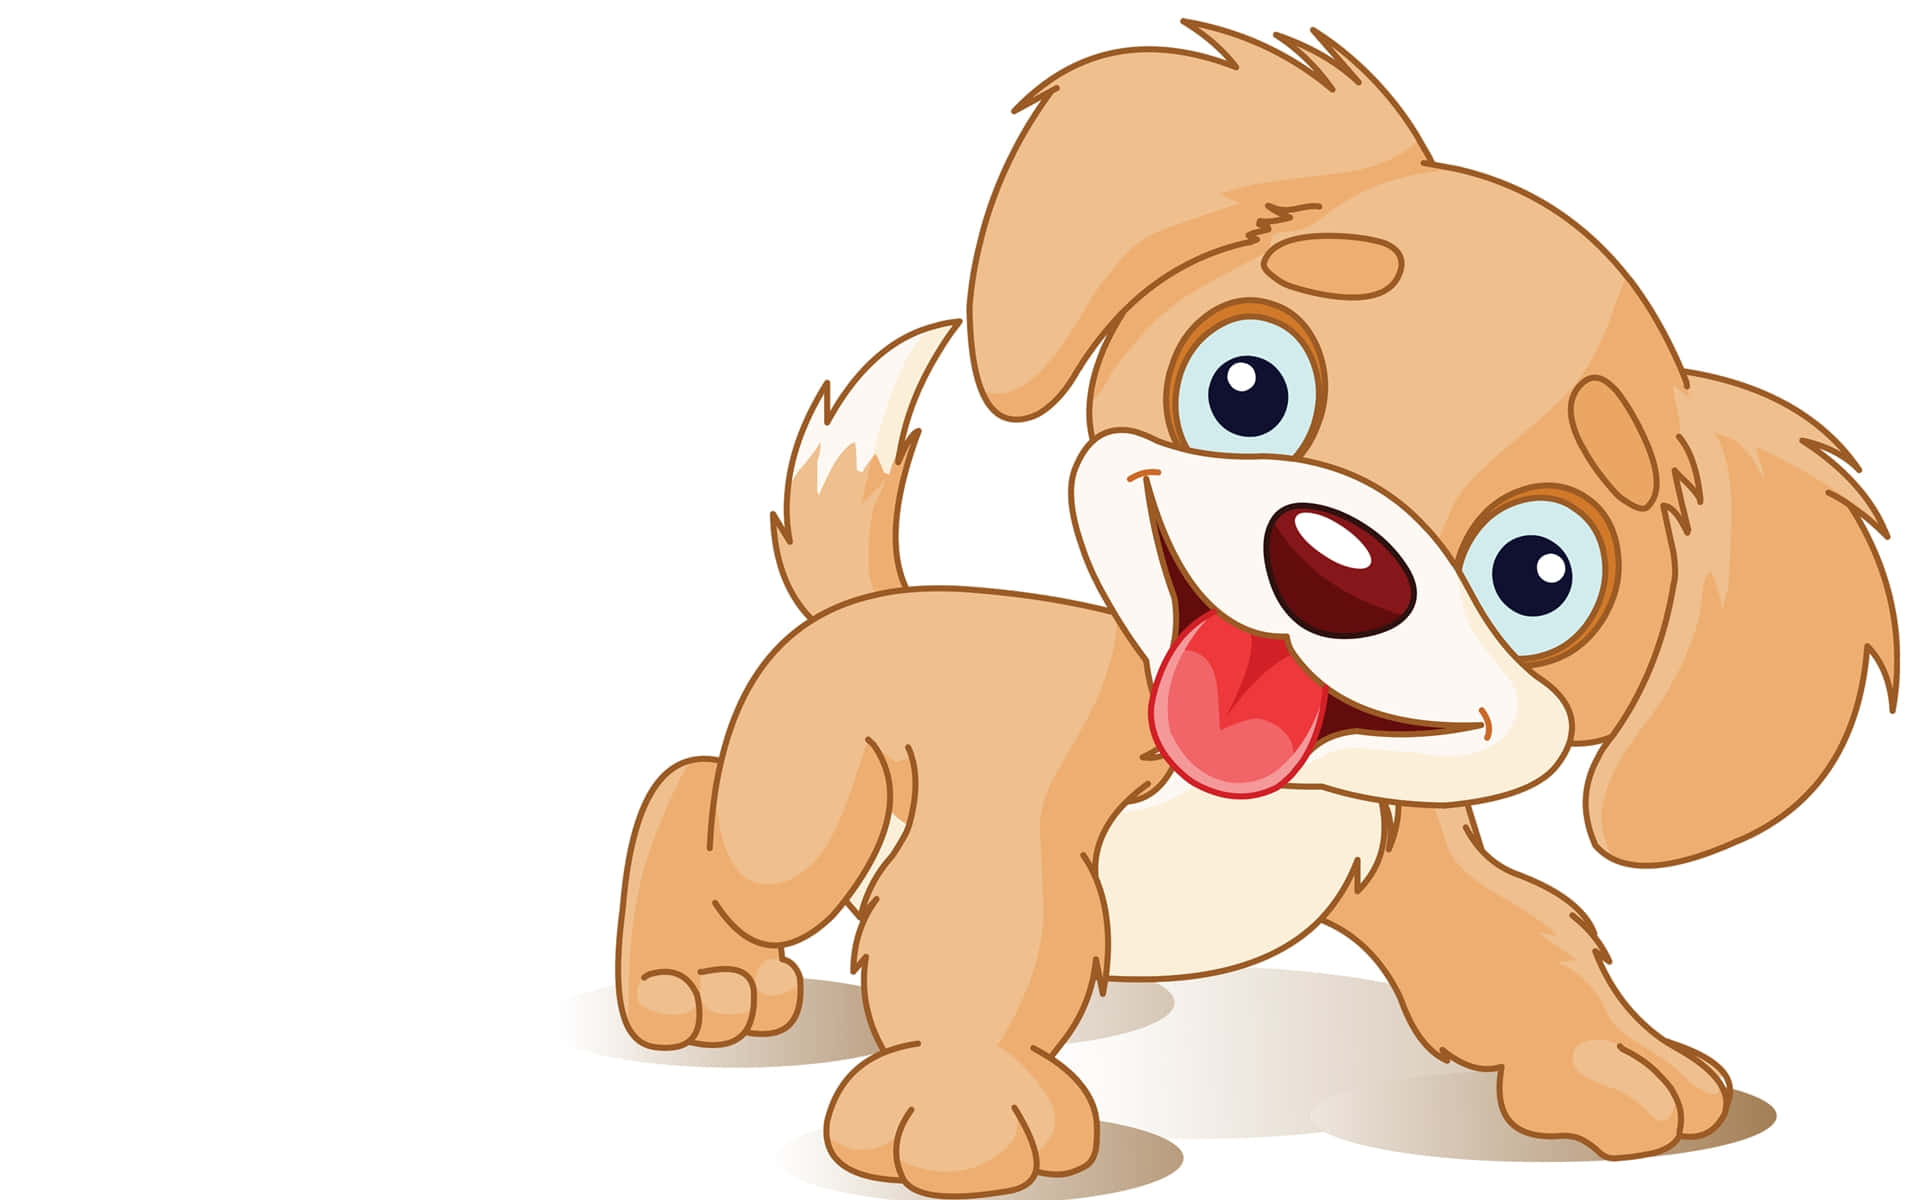 Free Cute Cartoon Dog Wallpaper Downloads, [100+] Cute Cartoon Dog  Wallpapers for FREE 